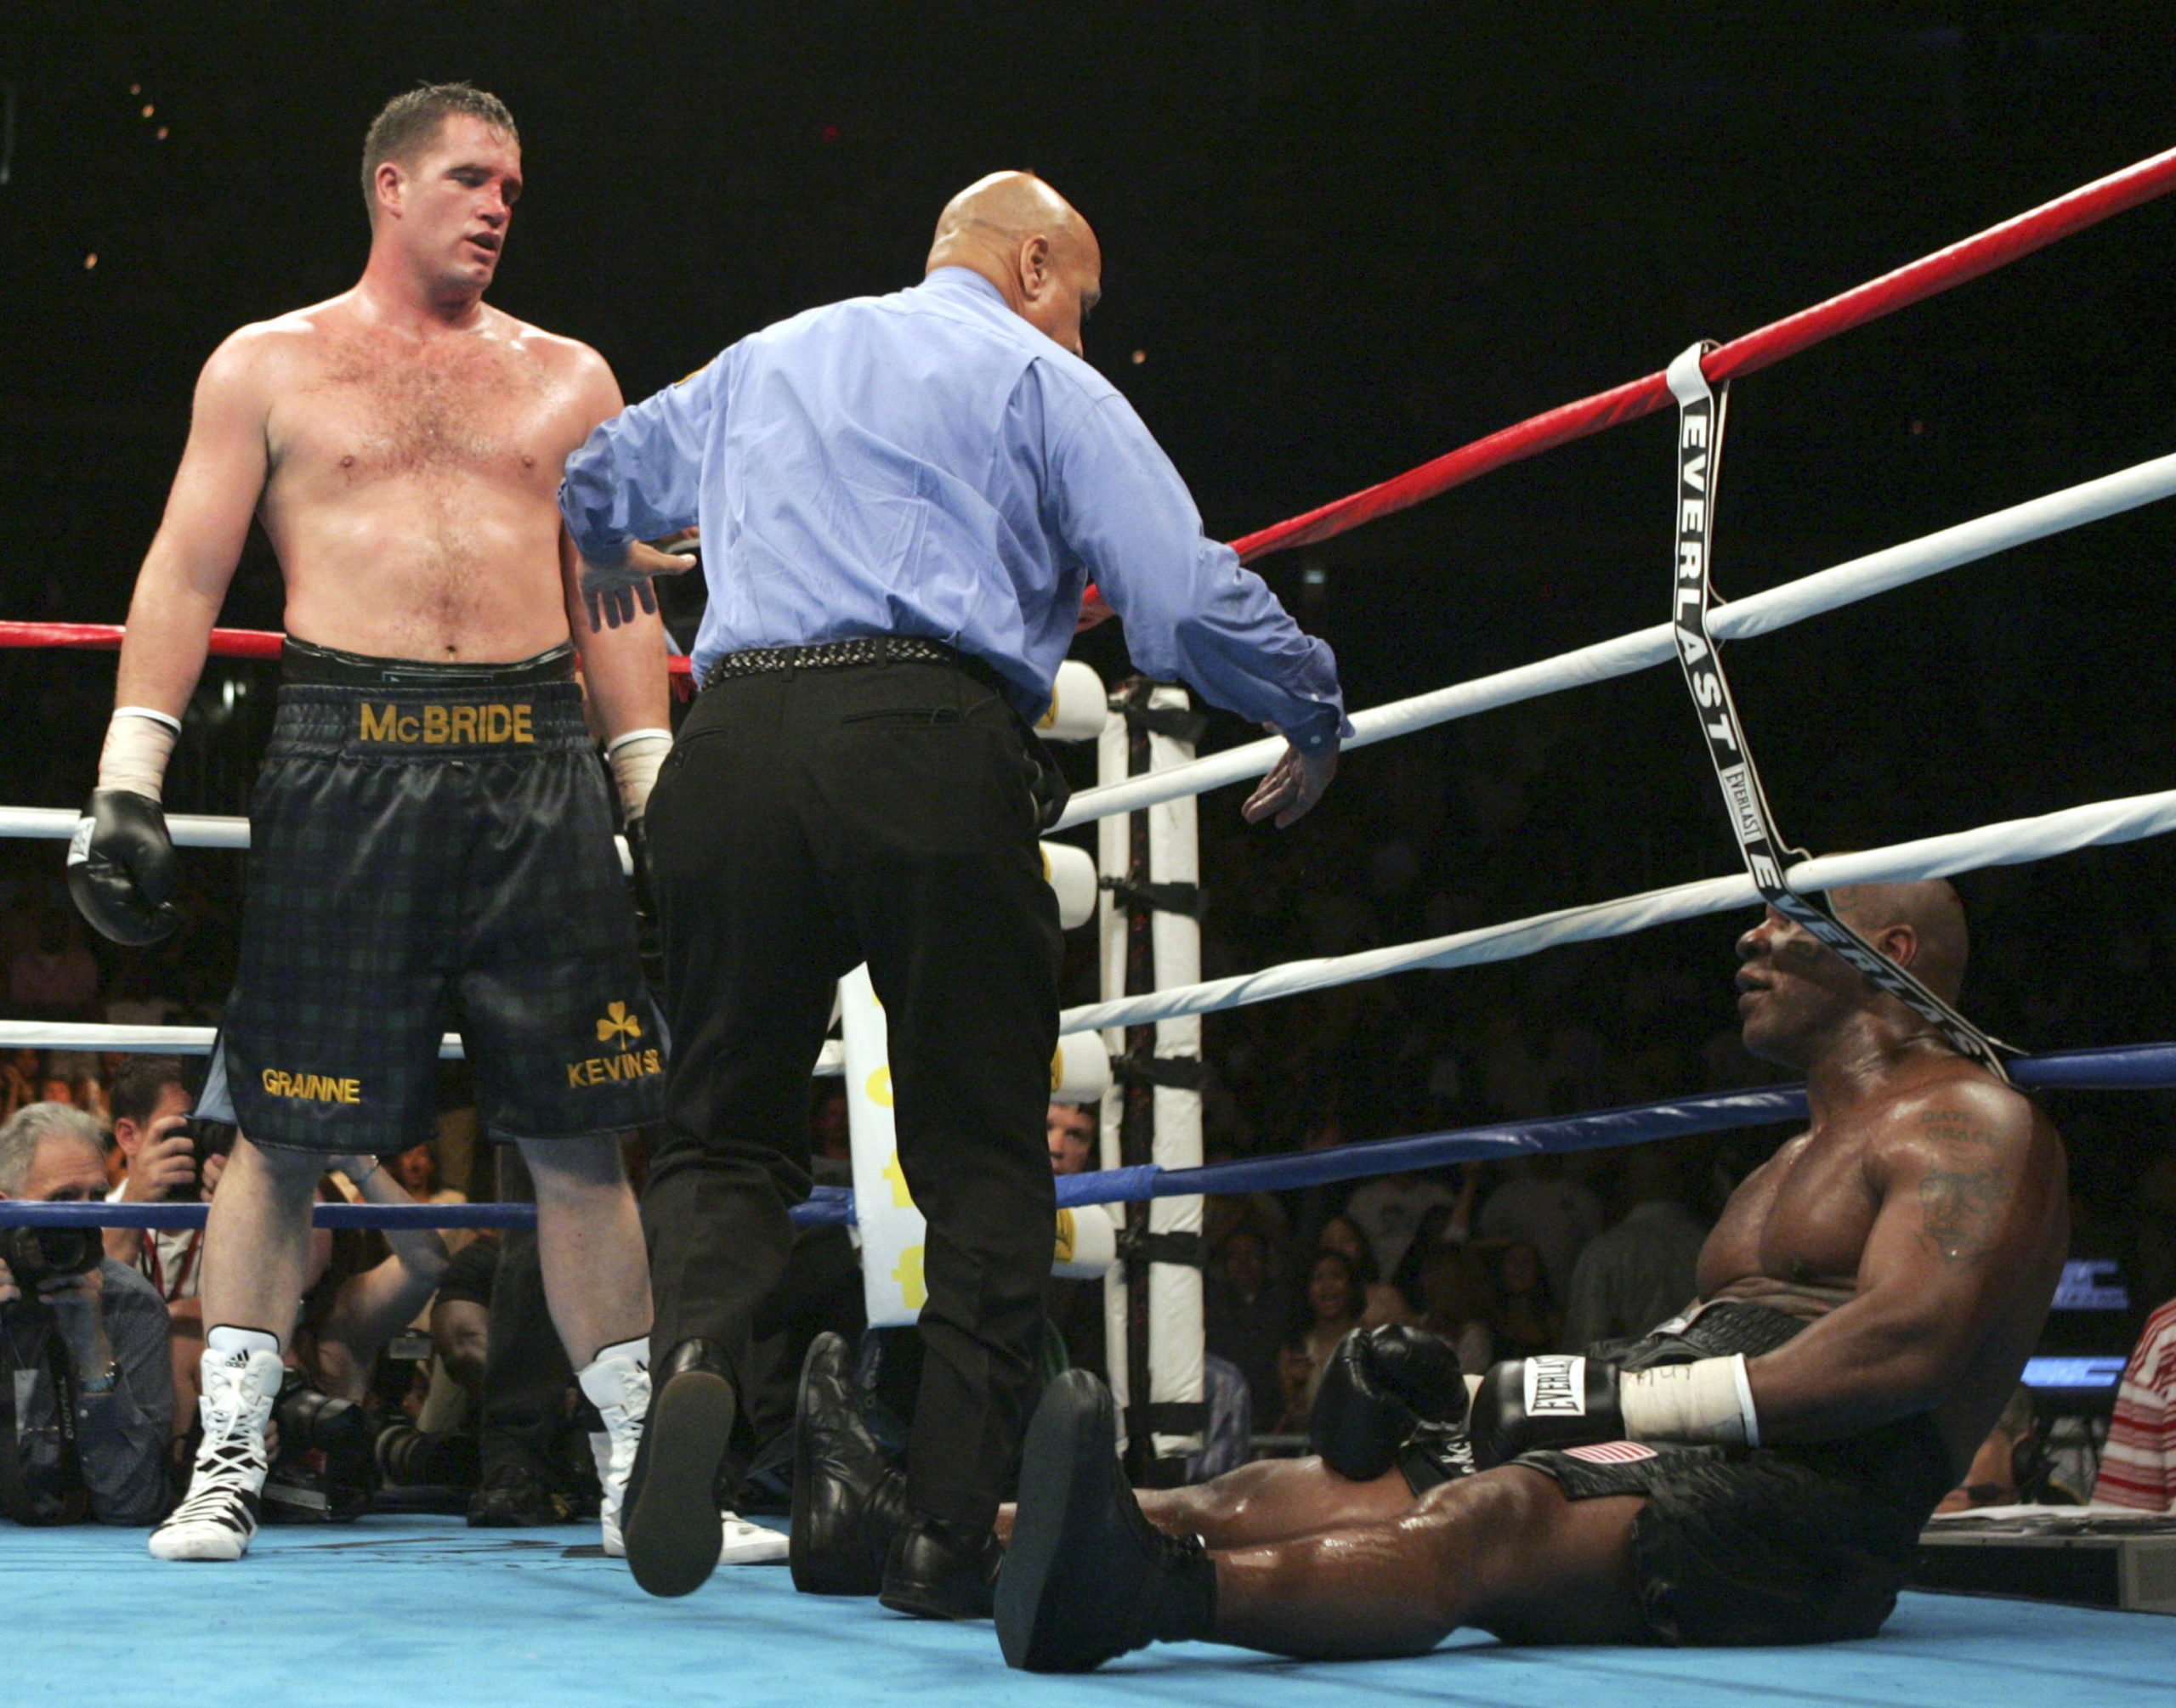 Mike Tyson vs Kevin McBride - June 11, 2005